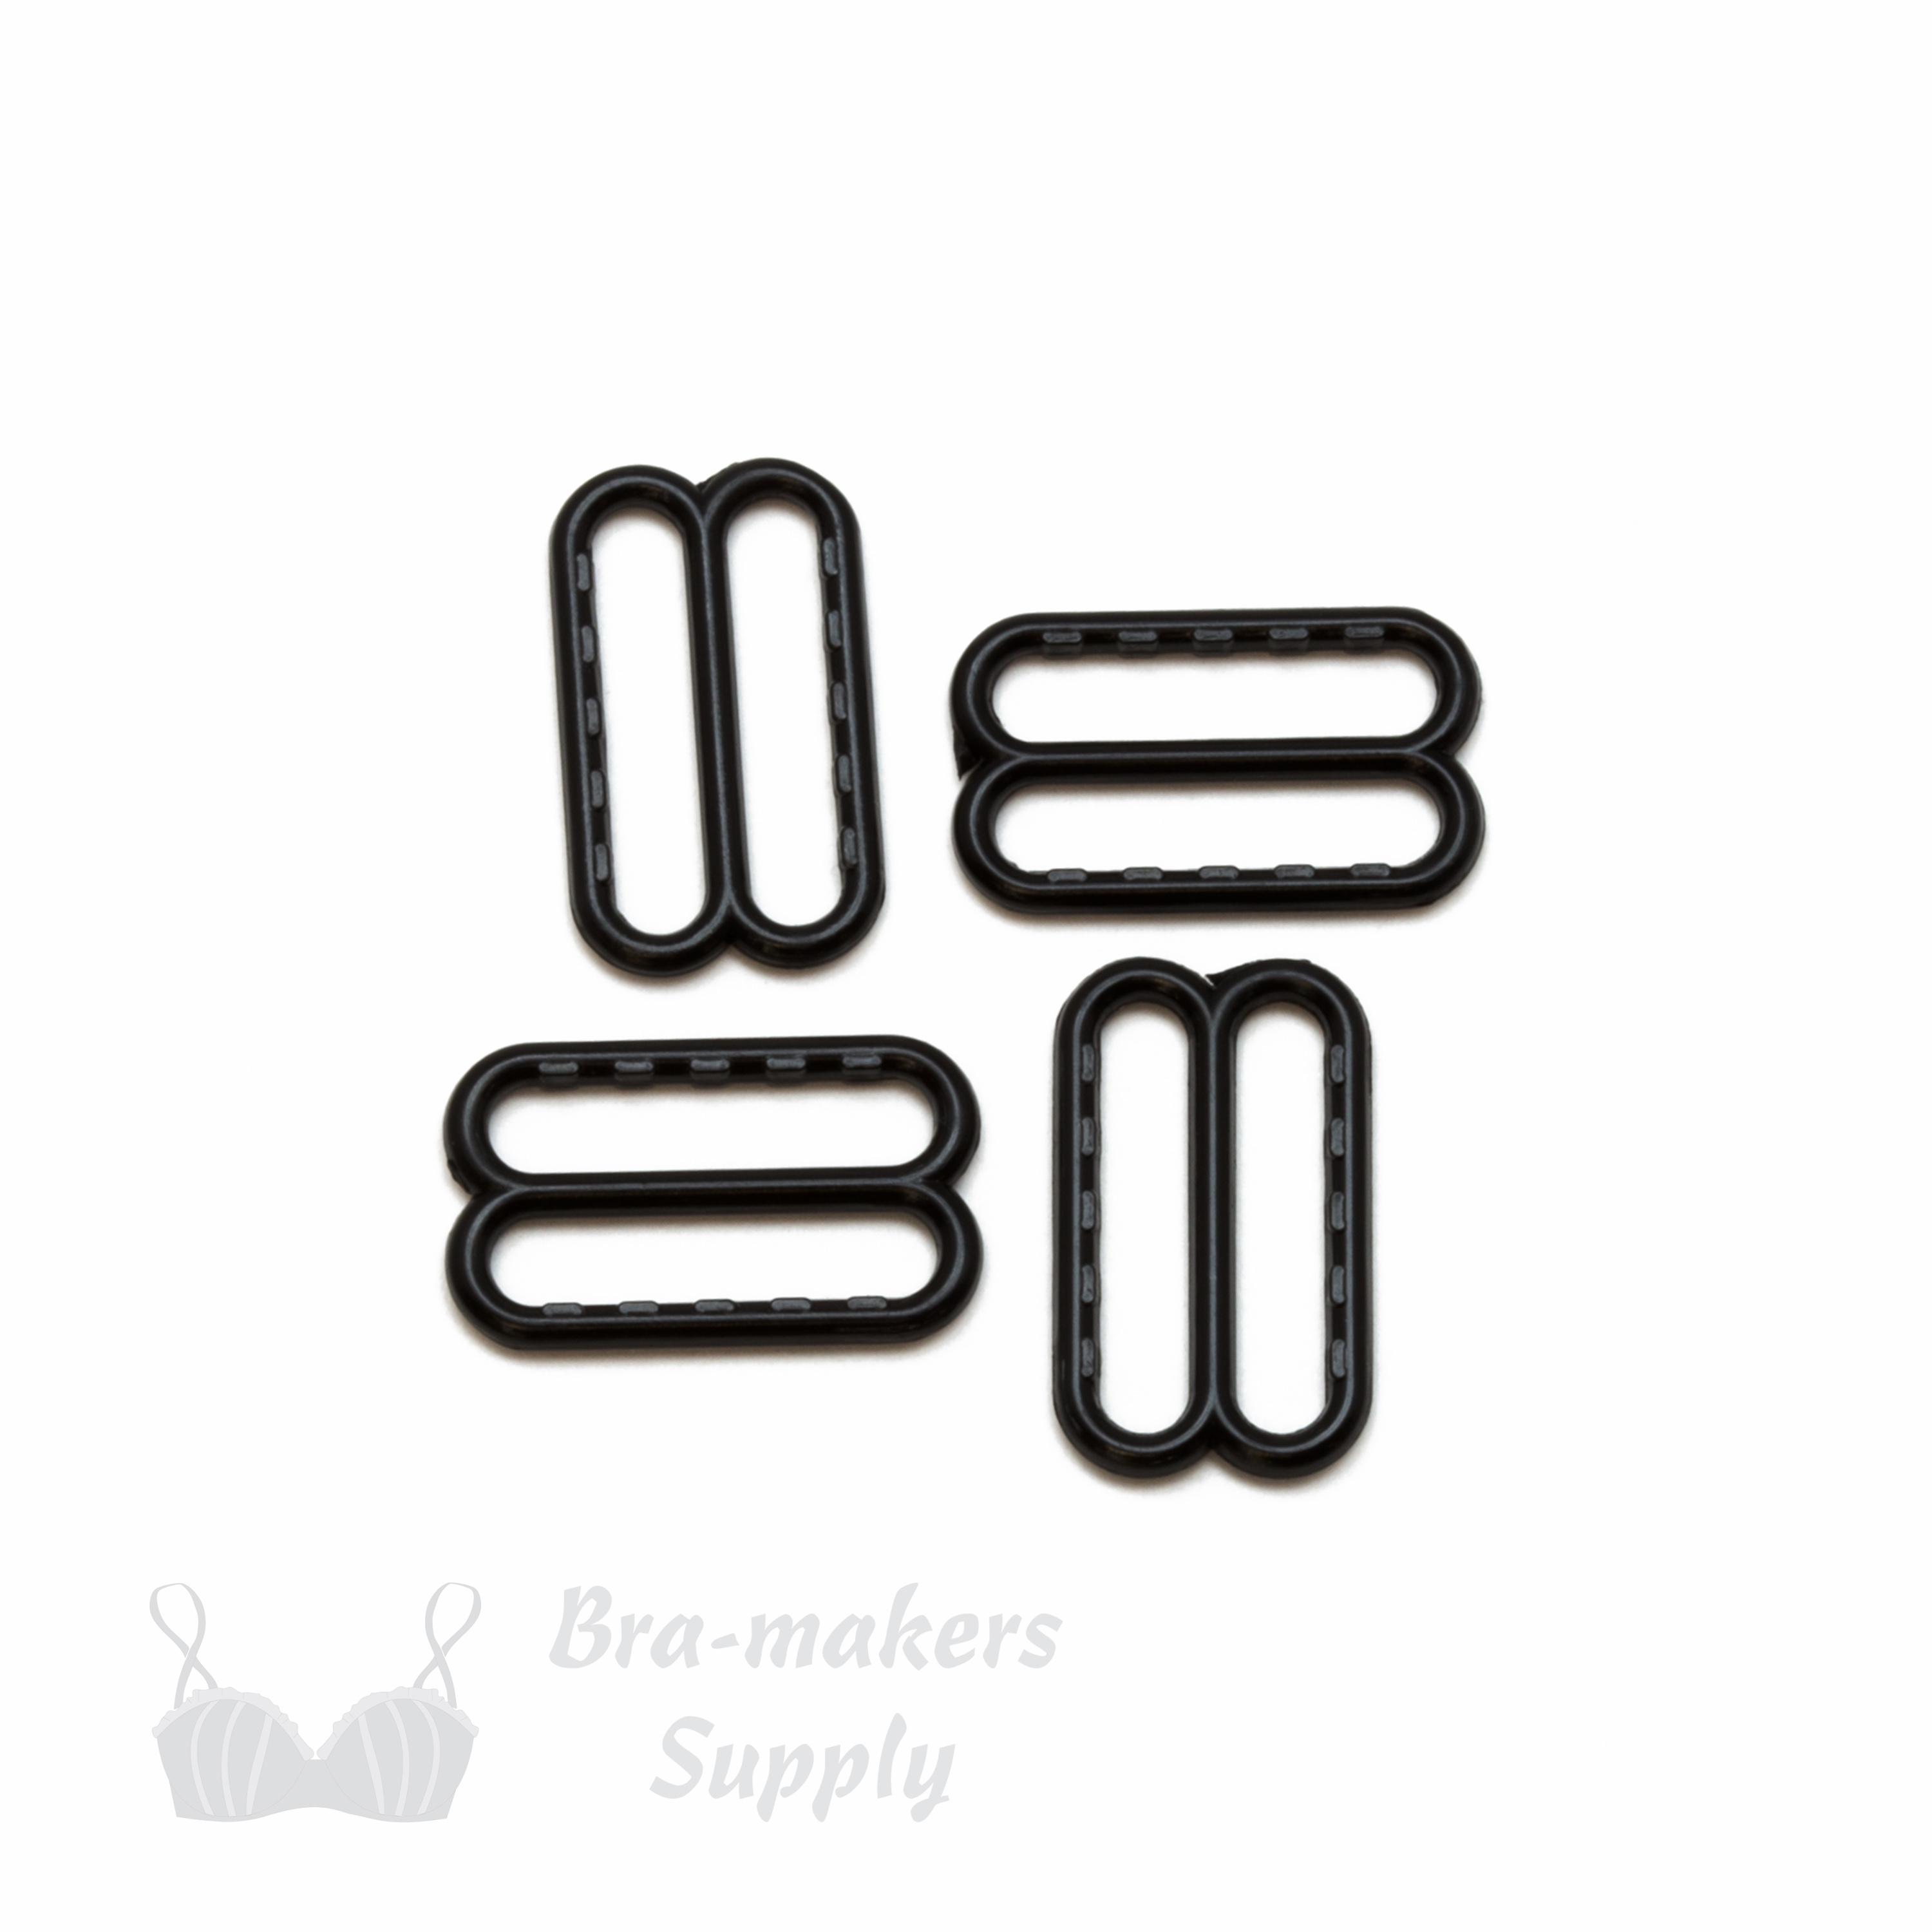 Clear Plastic Bra Making Rings and Sliders, 8 Sets Rings and Sliders for  Bra Making and Lingerie Sewing 2cm Bra Adjusters Bra Making 